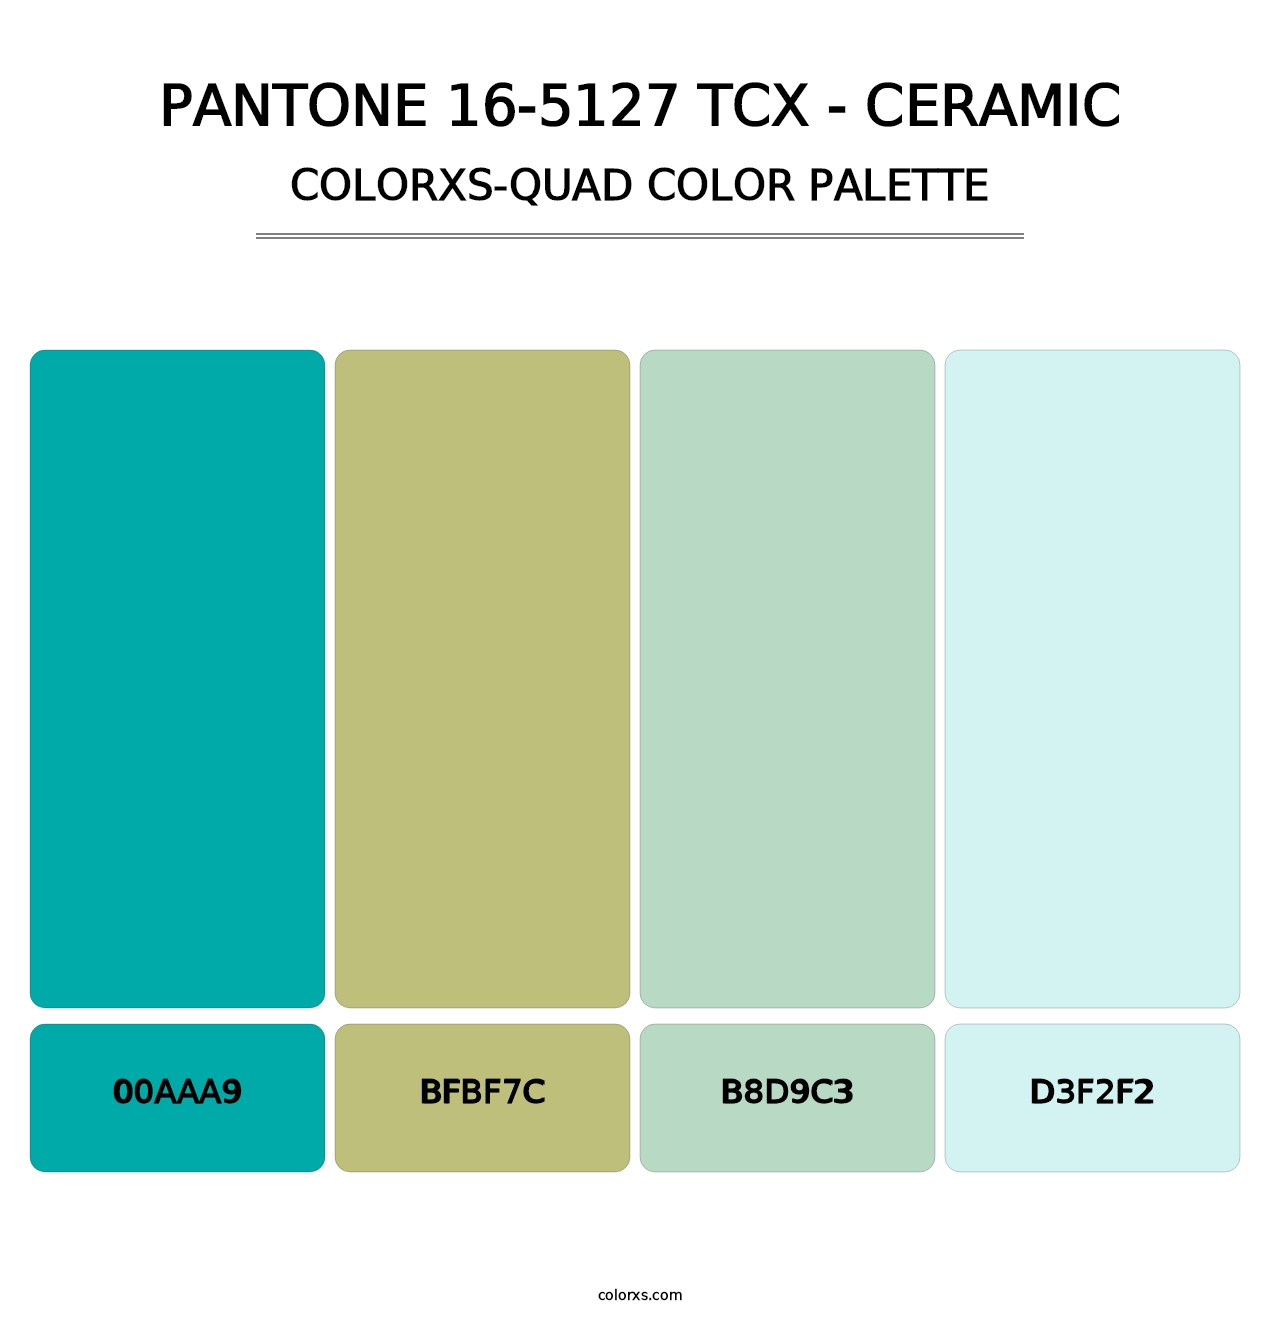 PANTONE 16-5127 TCX - Ceramic - Colorxs Quad Palette